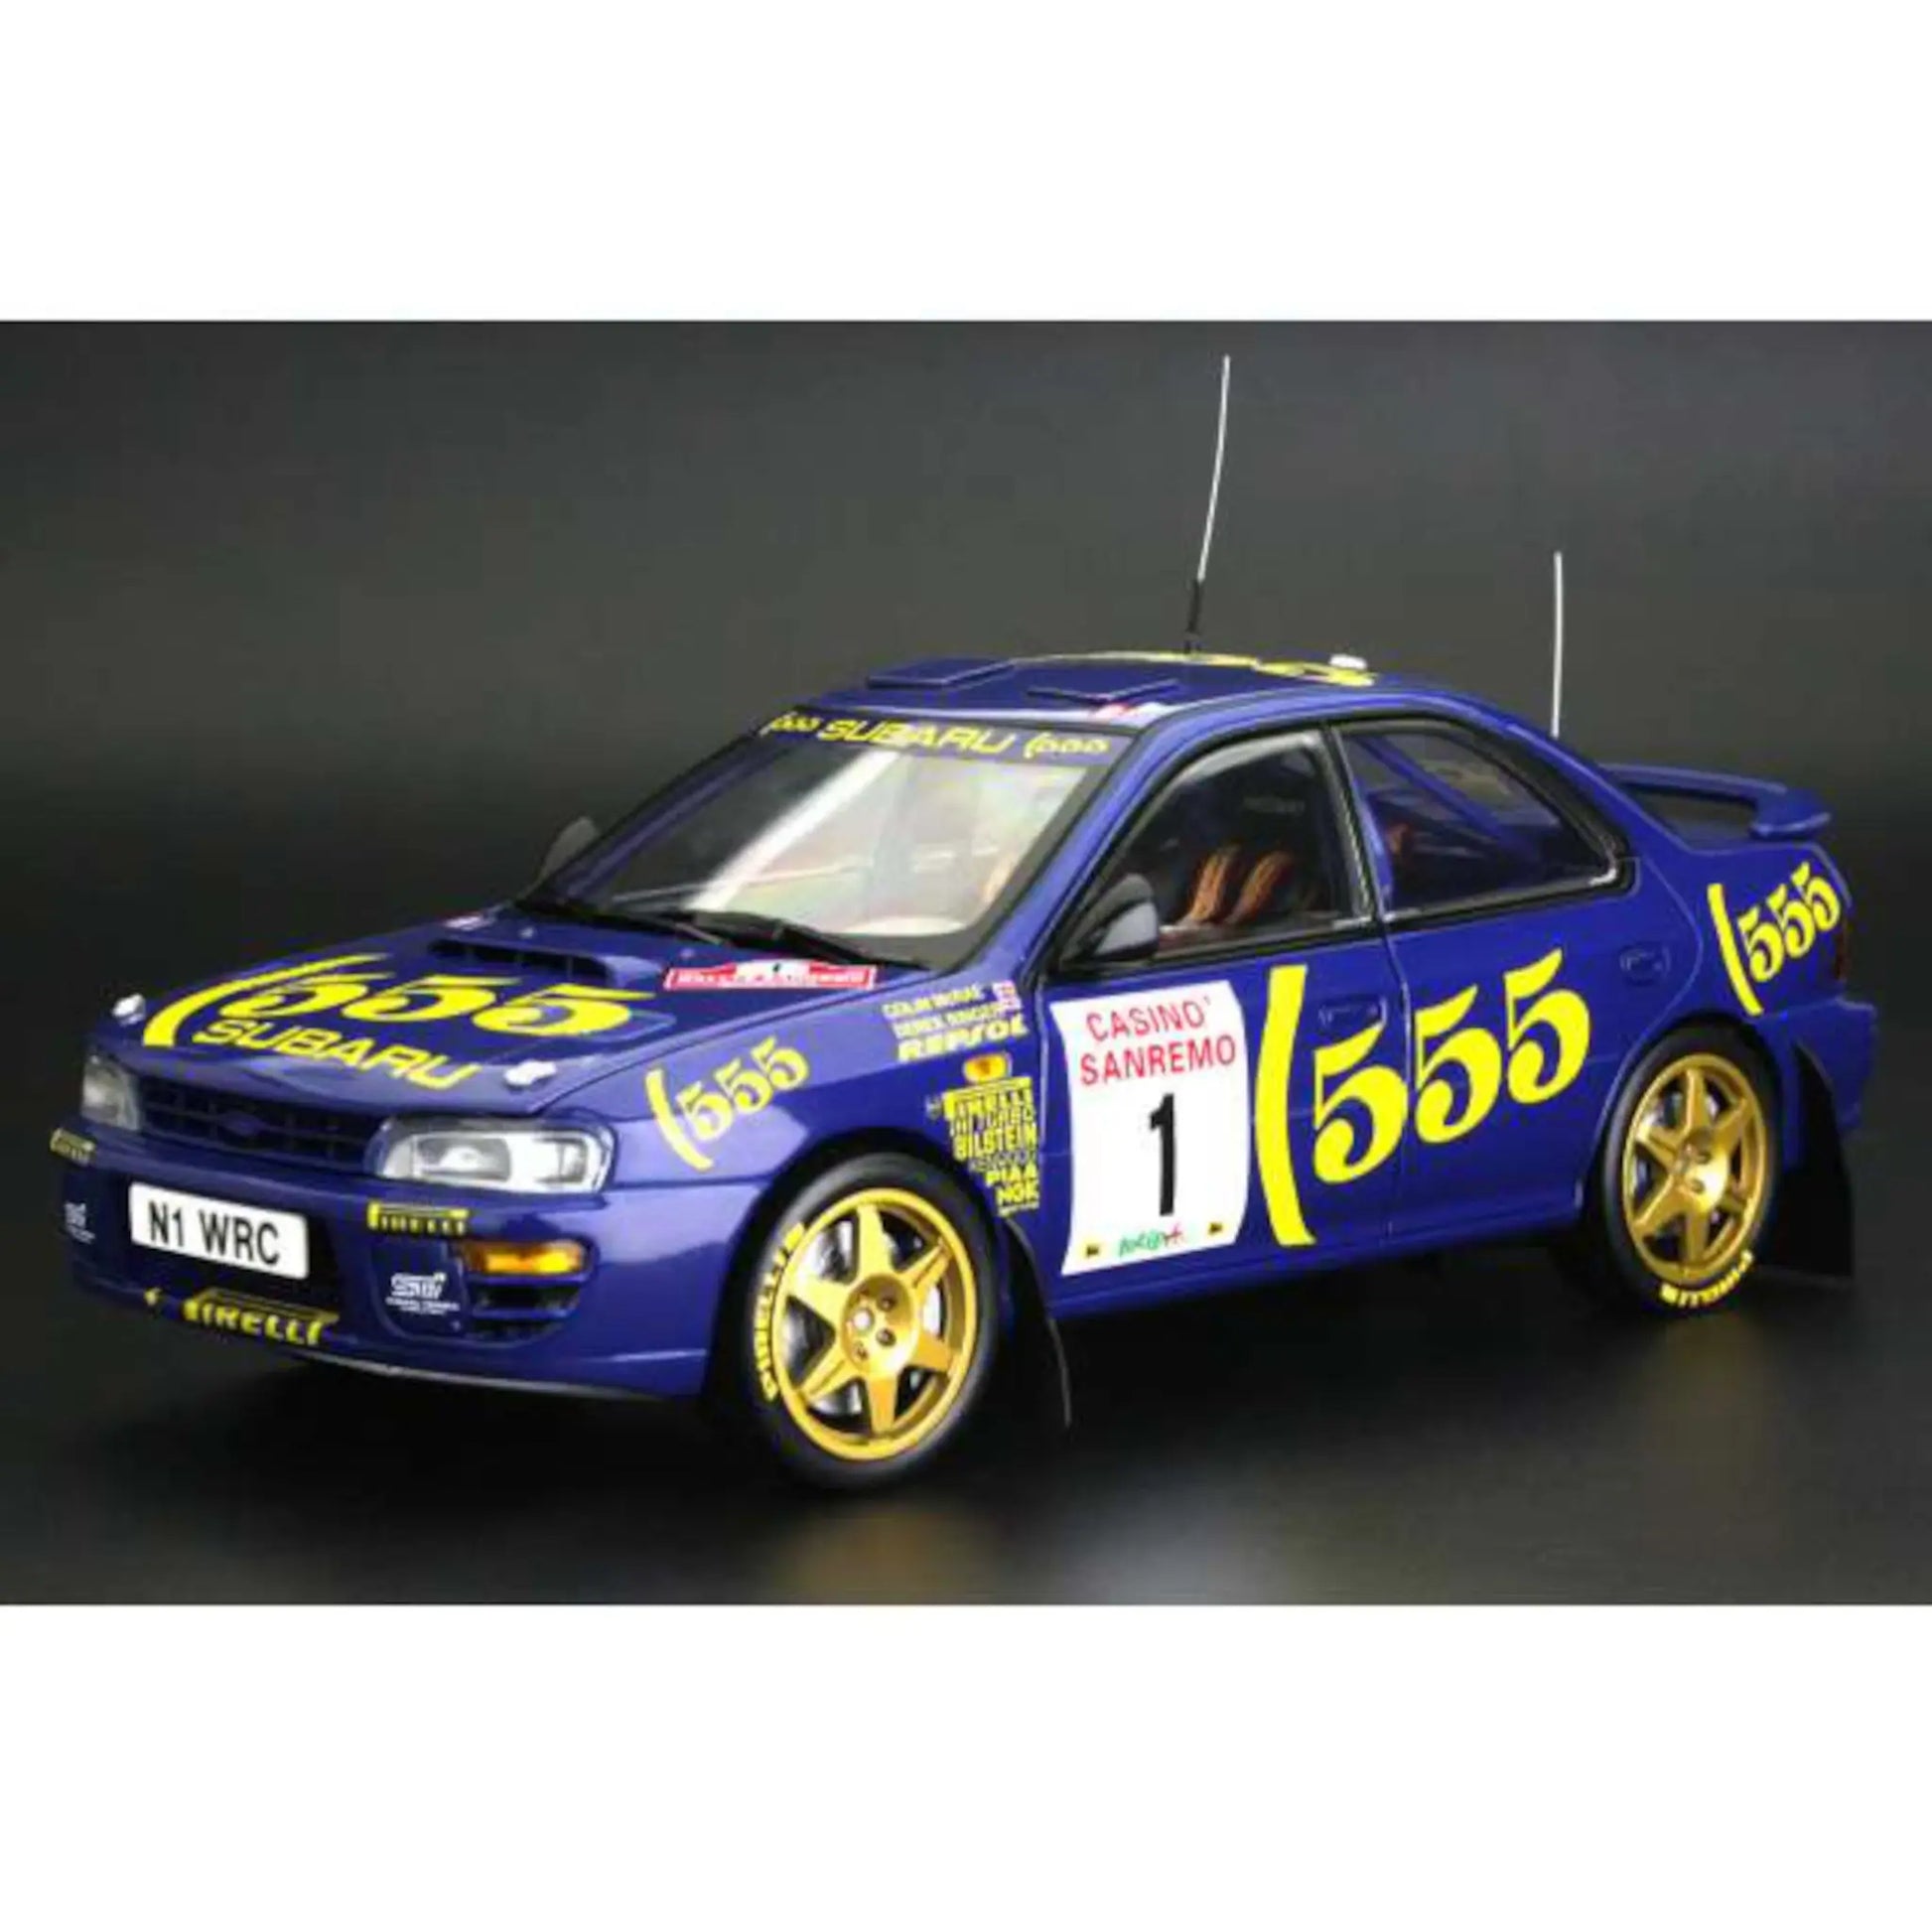 Subaru Impreza 555 #1 C.McRae D.Ringer winner San Remo Rallye 1996 SunStar 1/18 | Motors Miniatures